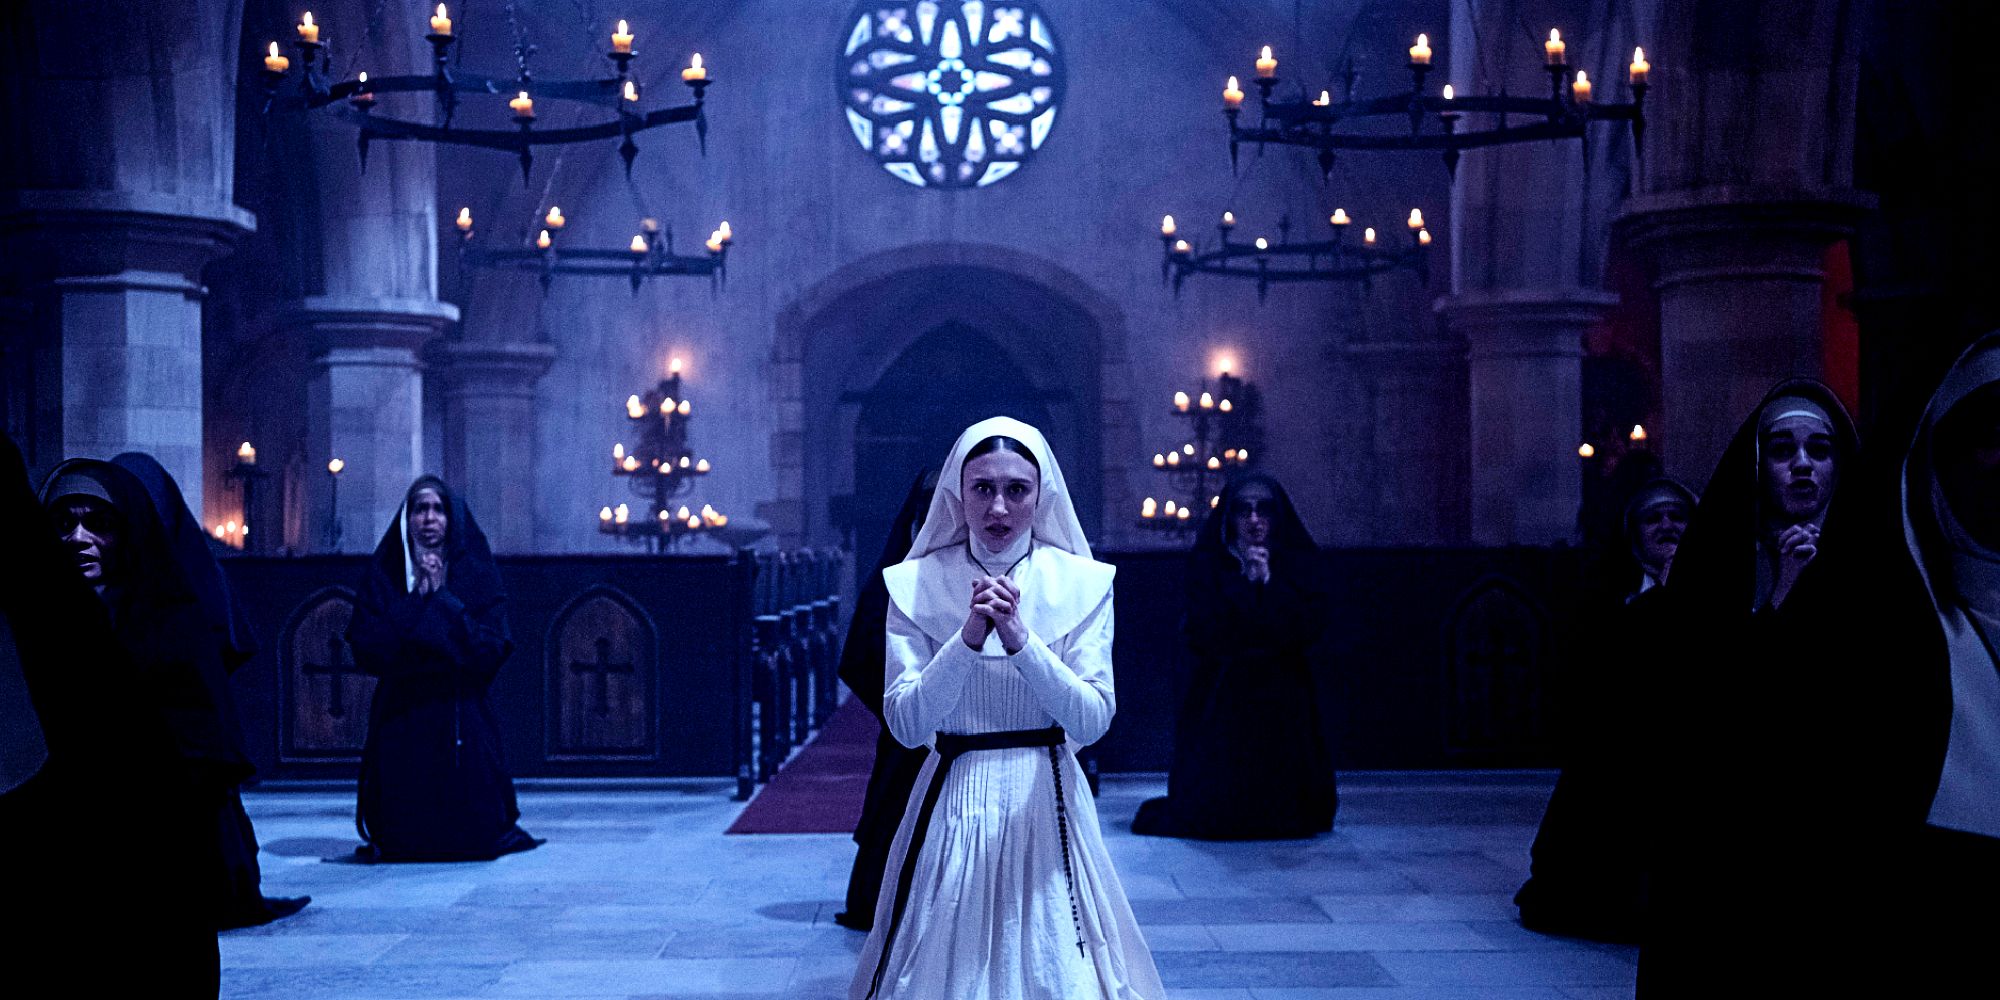 Taissa Farmiga as Sister Irene on her knees praying with other nuns in The Nun